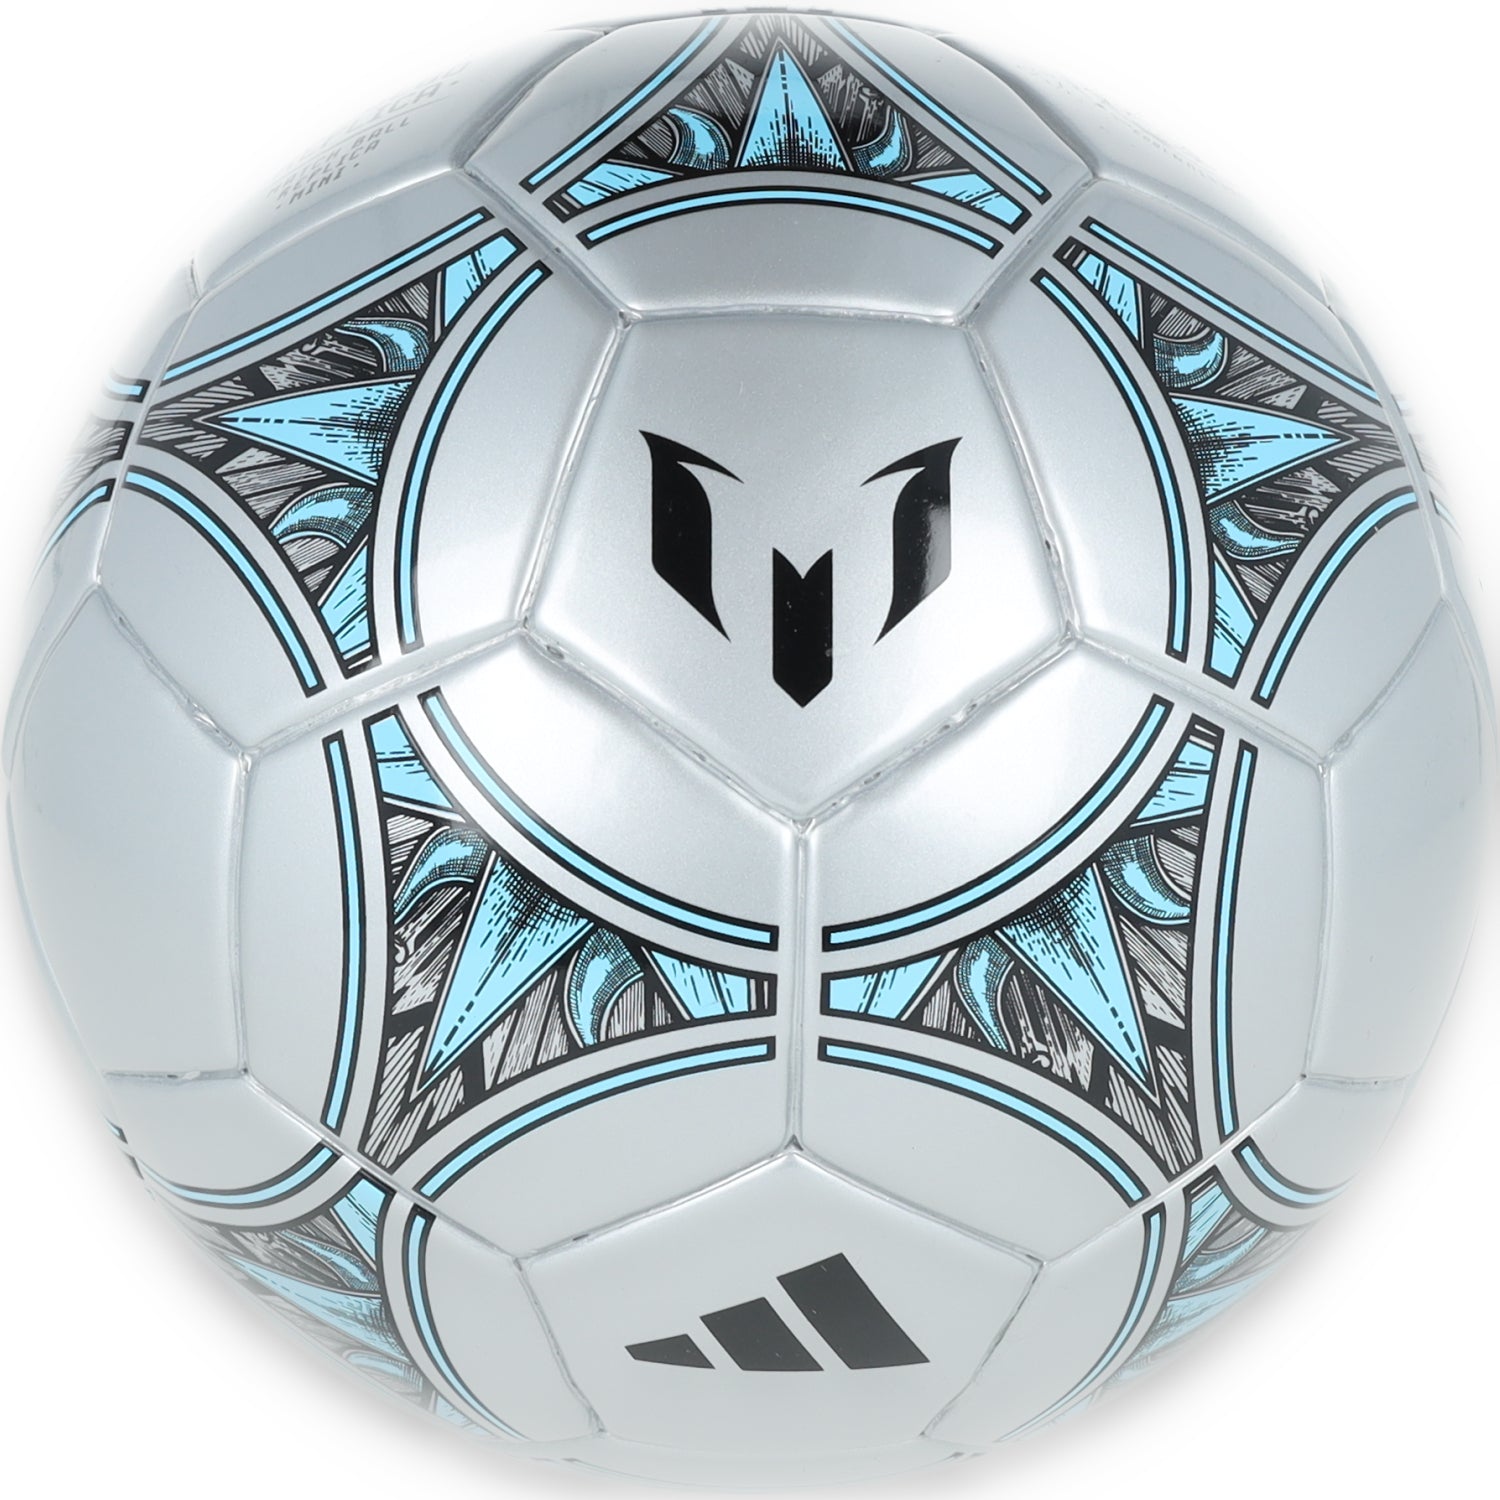 Adidas Messi CLB Soccer Ball